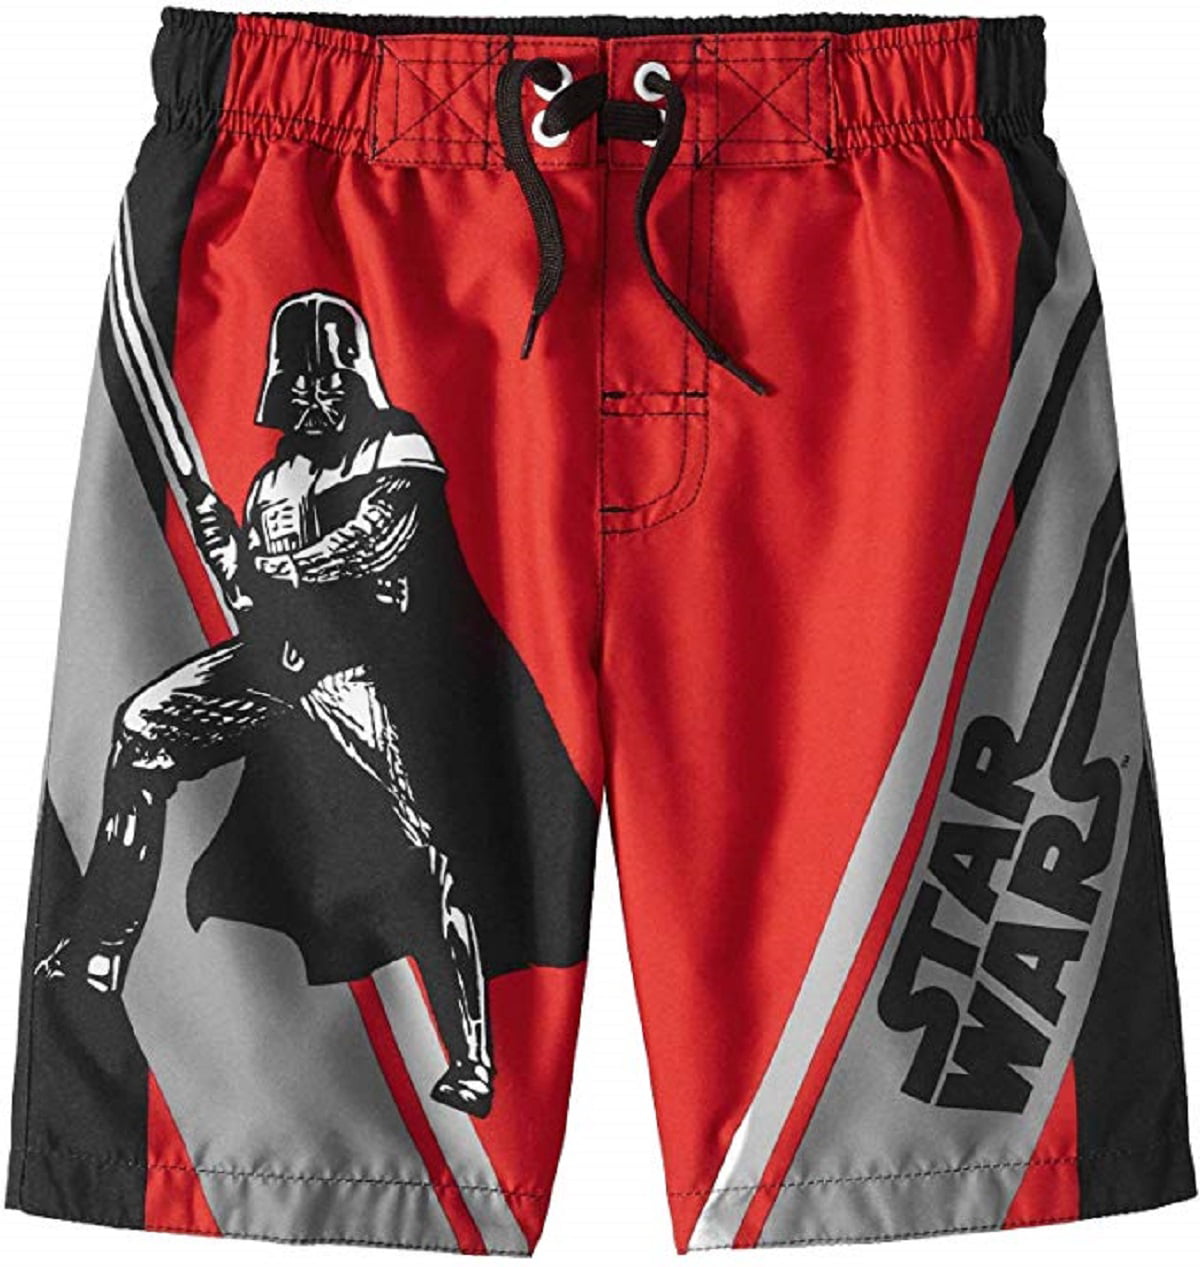 Star Wars Boys Swim Suit Trunks Board Shorts Sizes 4 5/6  7 Black Red New 